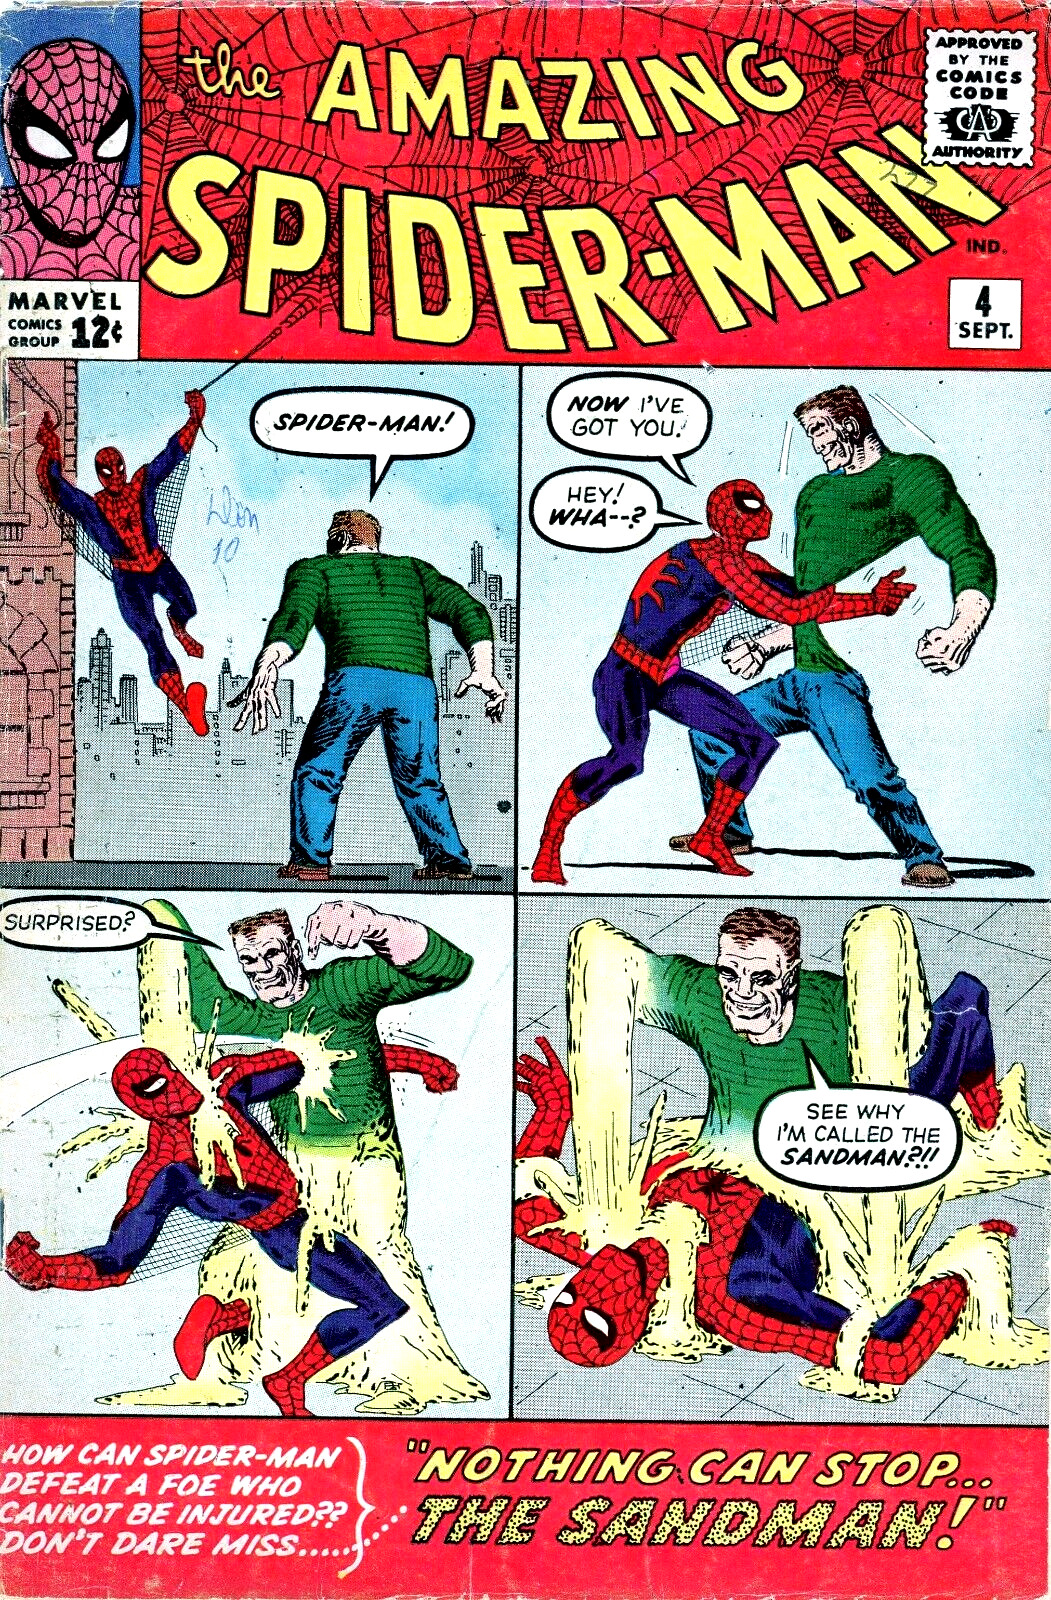 THE AMAZING SPIDER-MAN #4 MARVEL 1ST APP. SANDMAN 1963 COMIC BOOK NICE KEY